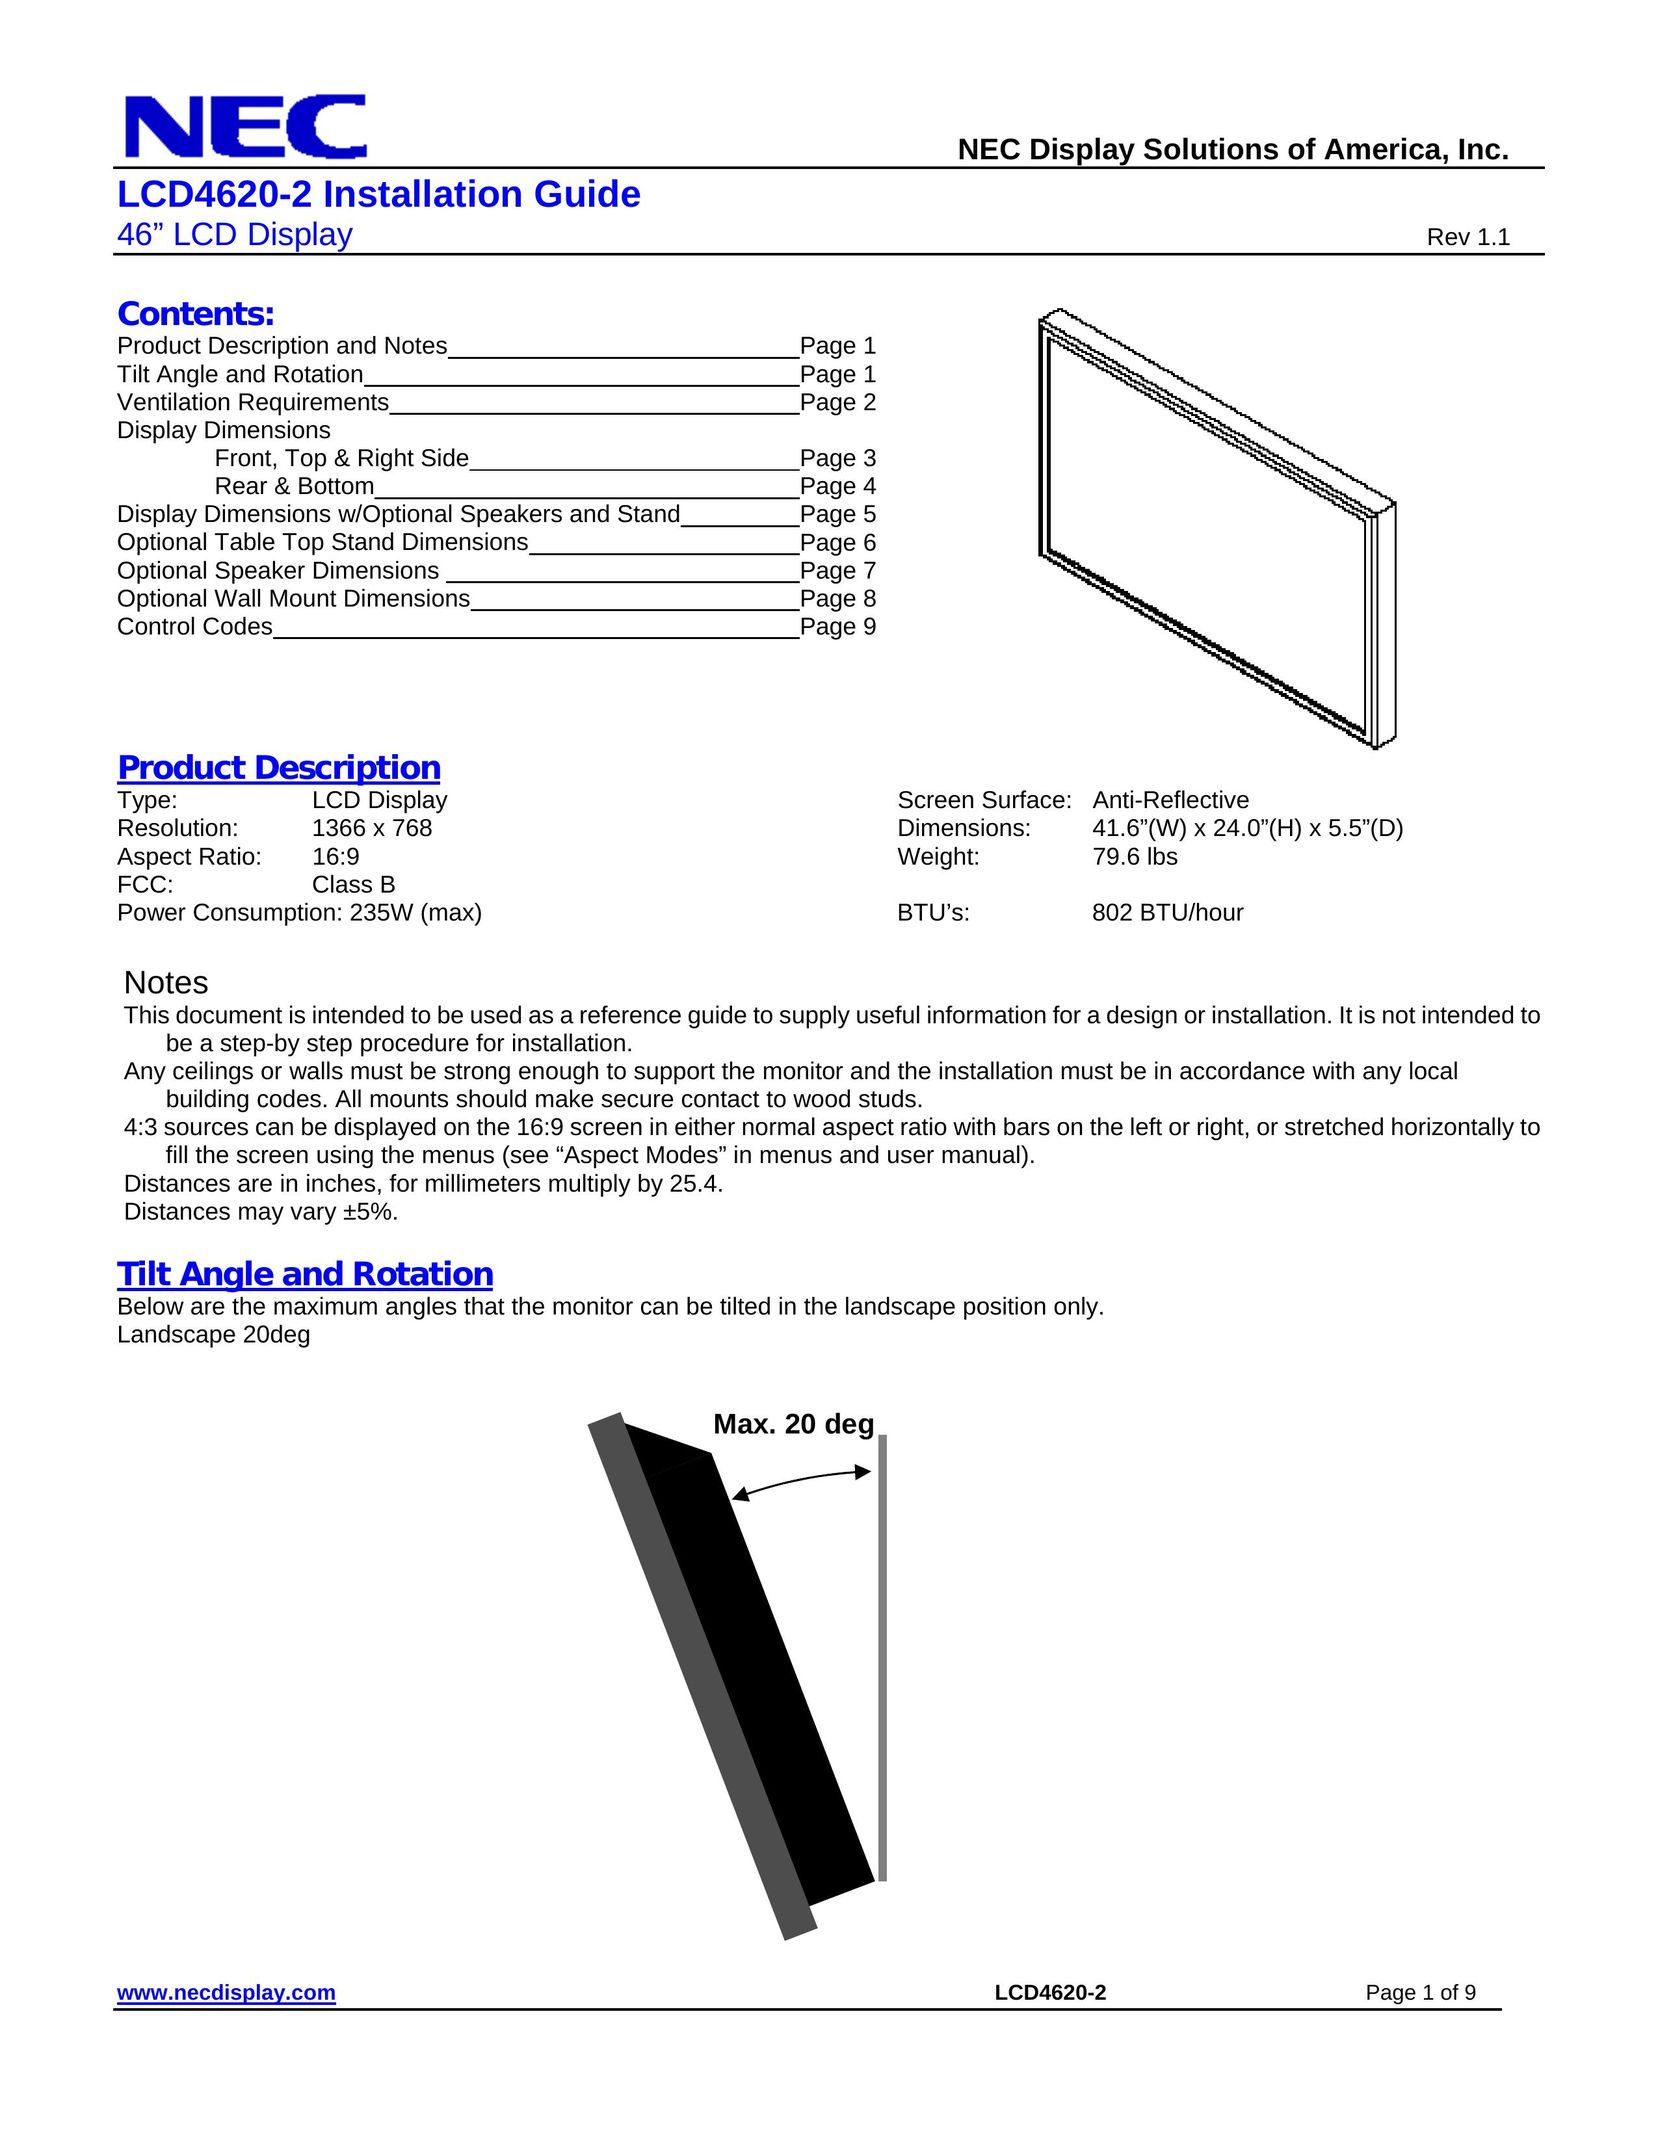 NEC LCD4620-2 Car Video System User Manual